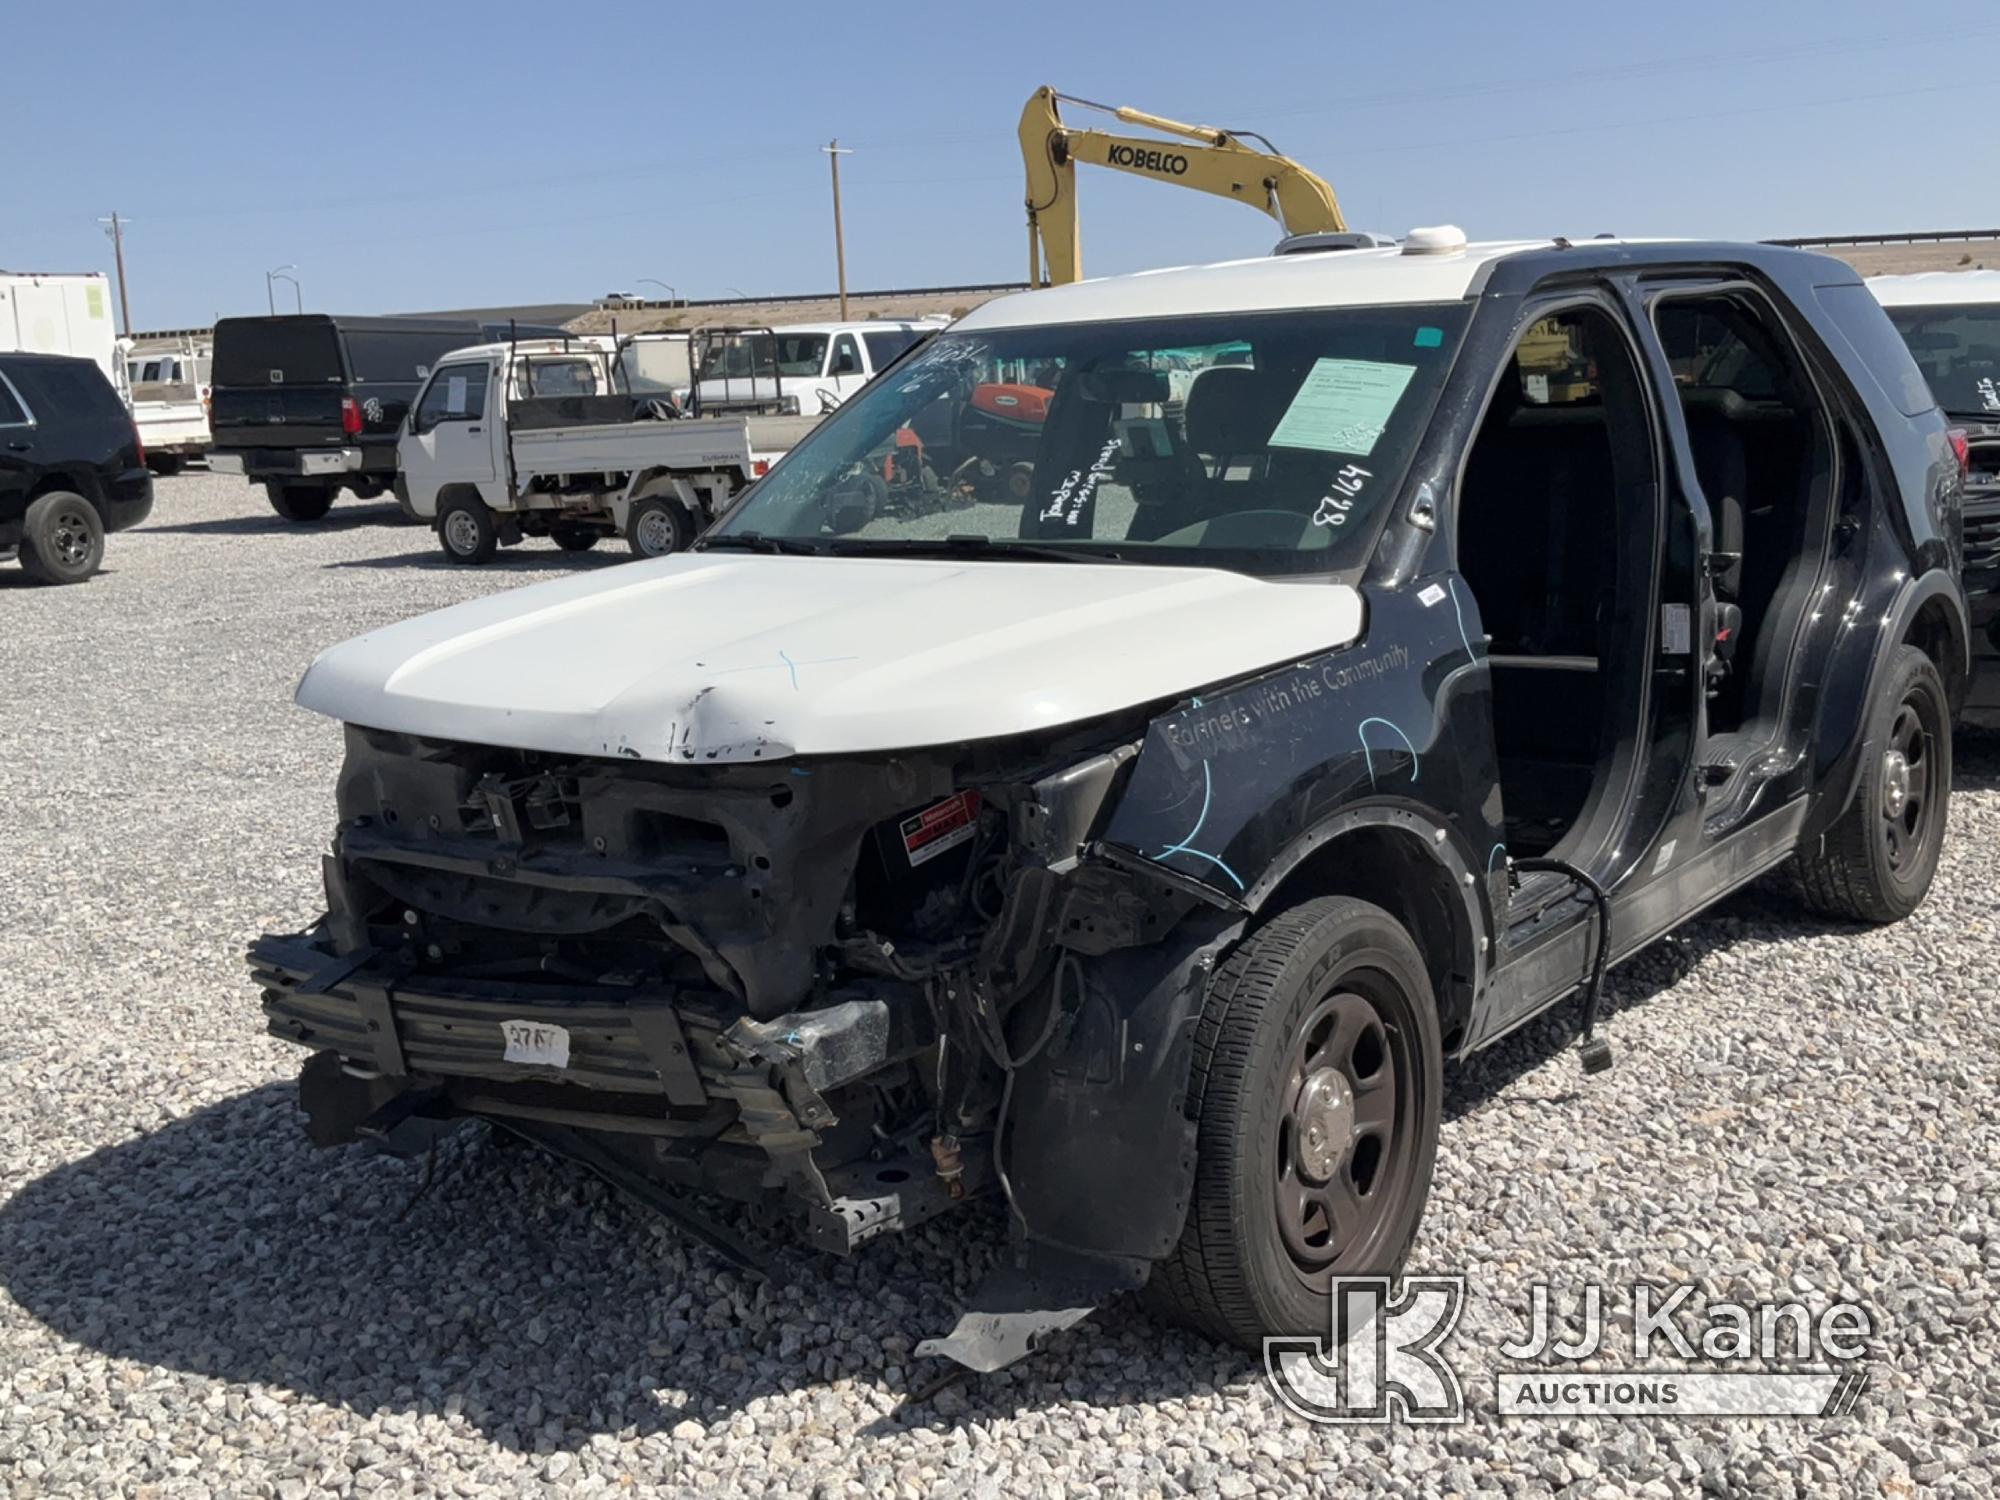 (Las Vegas, NV) 2016 Ford Explorer AWD Police Interceptor Towed In, Missing Parts Jump To Start, Run